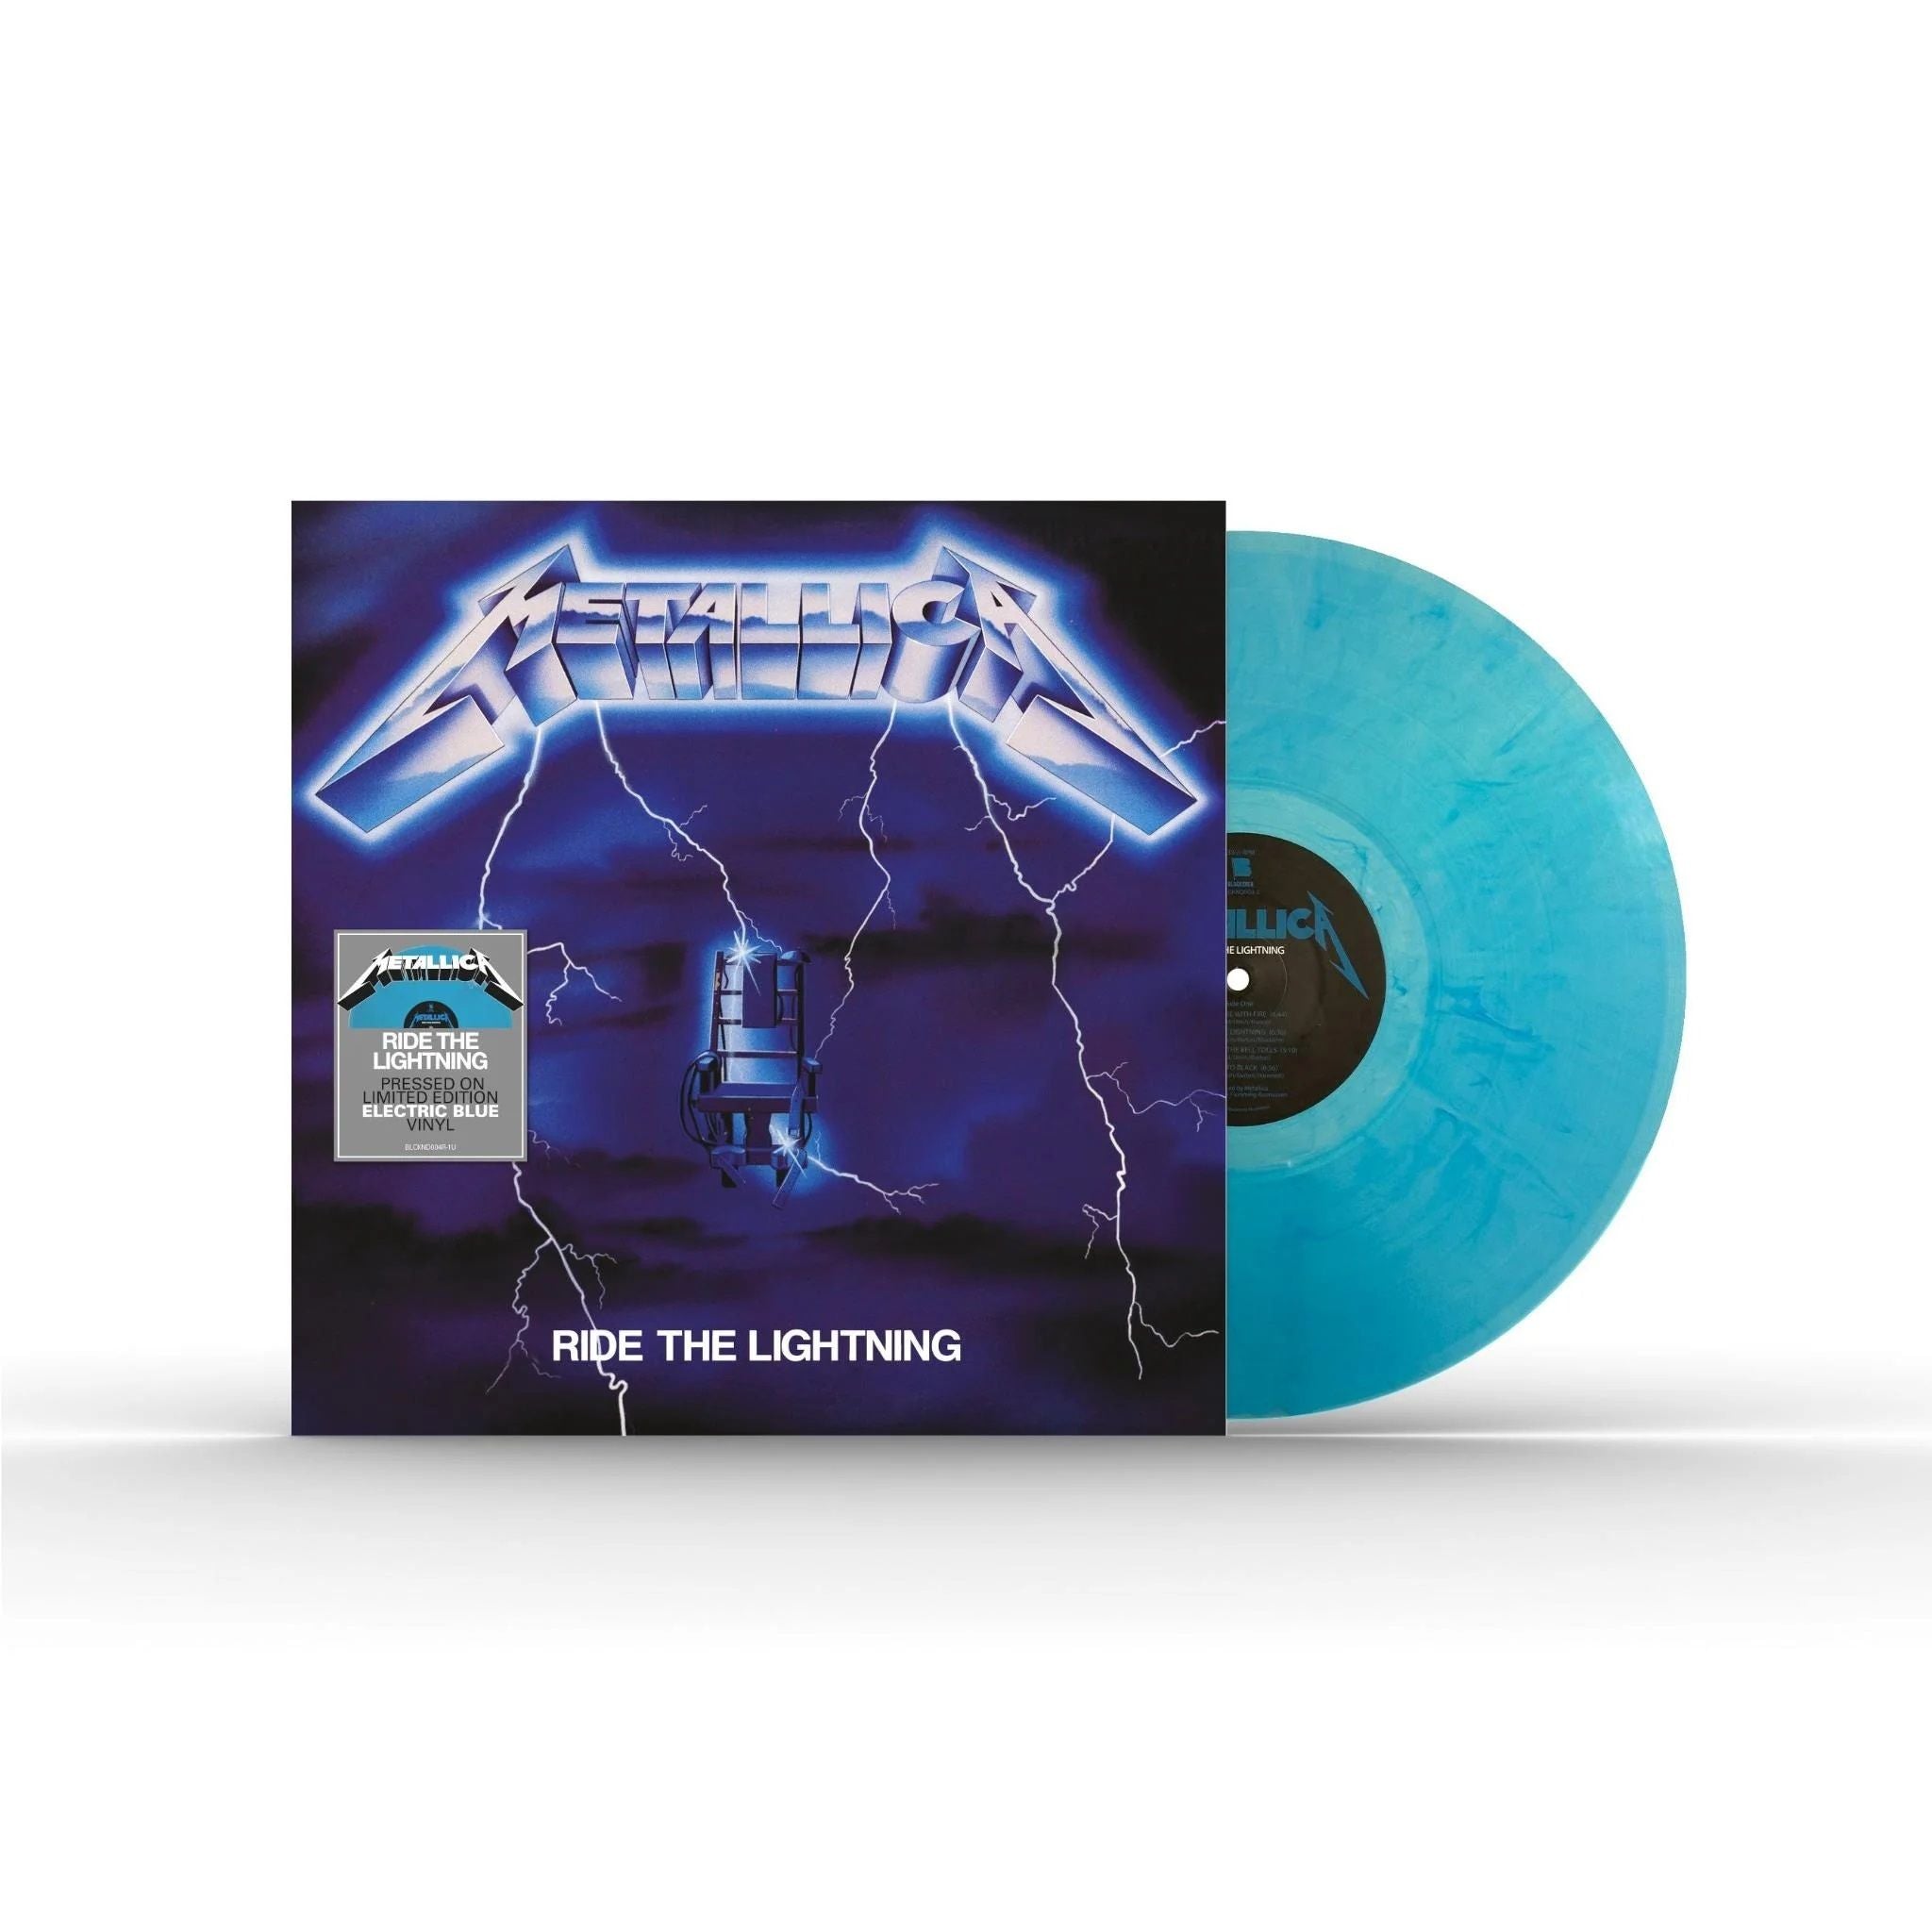 Metallica - Ride The Lightning (Ltd. Ed. Electric Blue vinyl reissue) - Vinyl - New